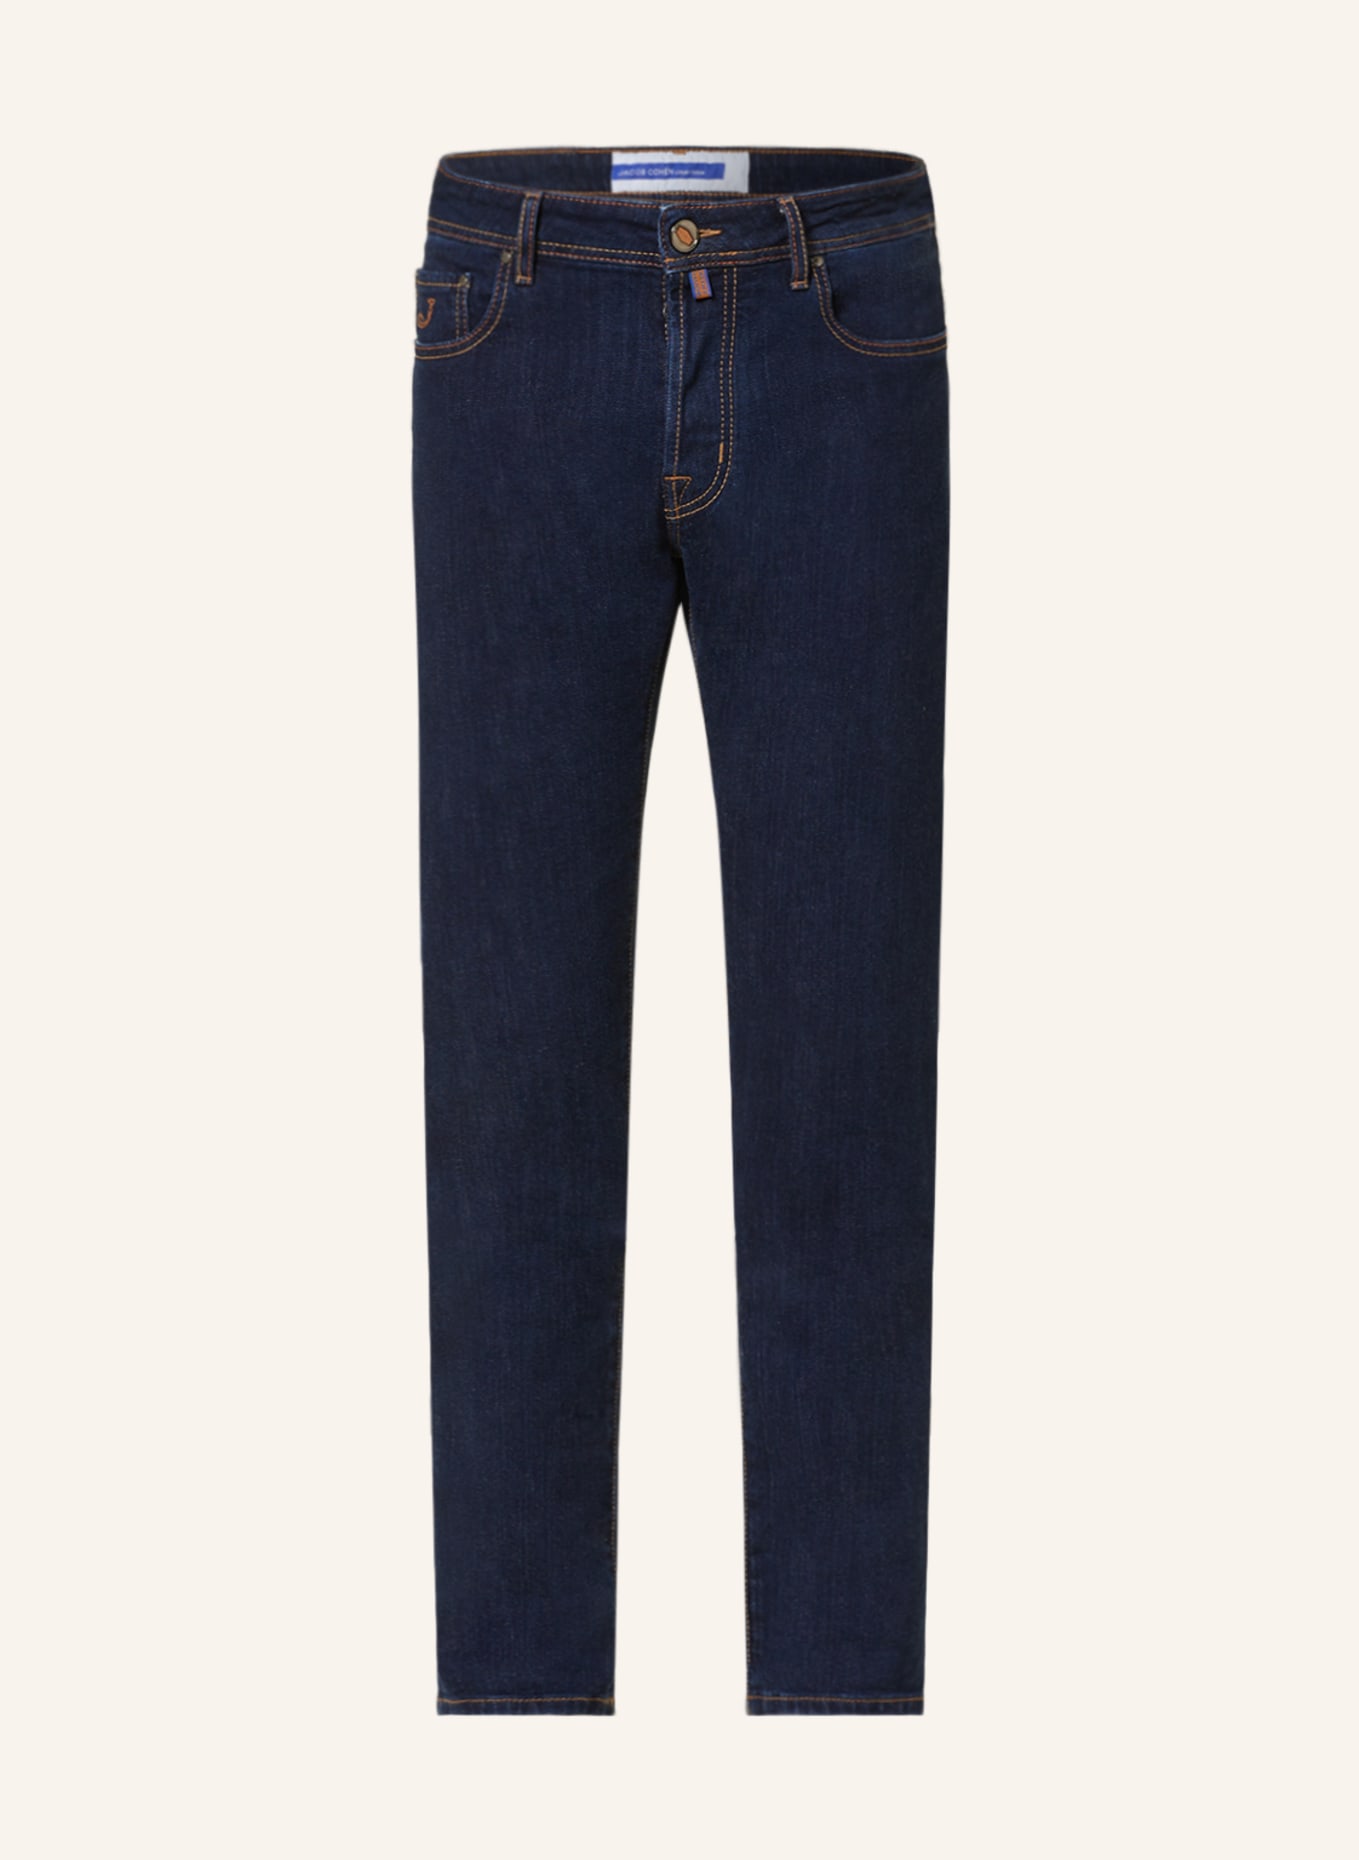 JACOB COHEN Jeans BARD Slim Fit, Farbe: 164D Dark Blue Rinsed (Bild 1)